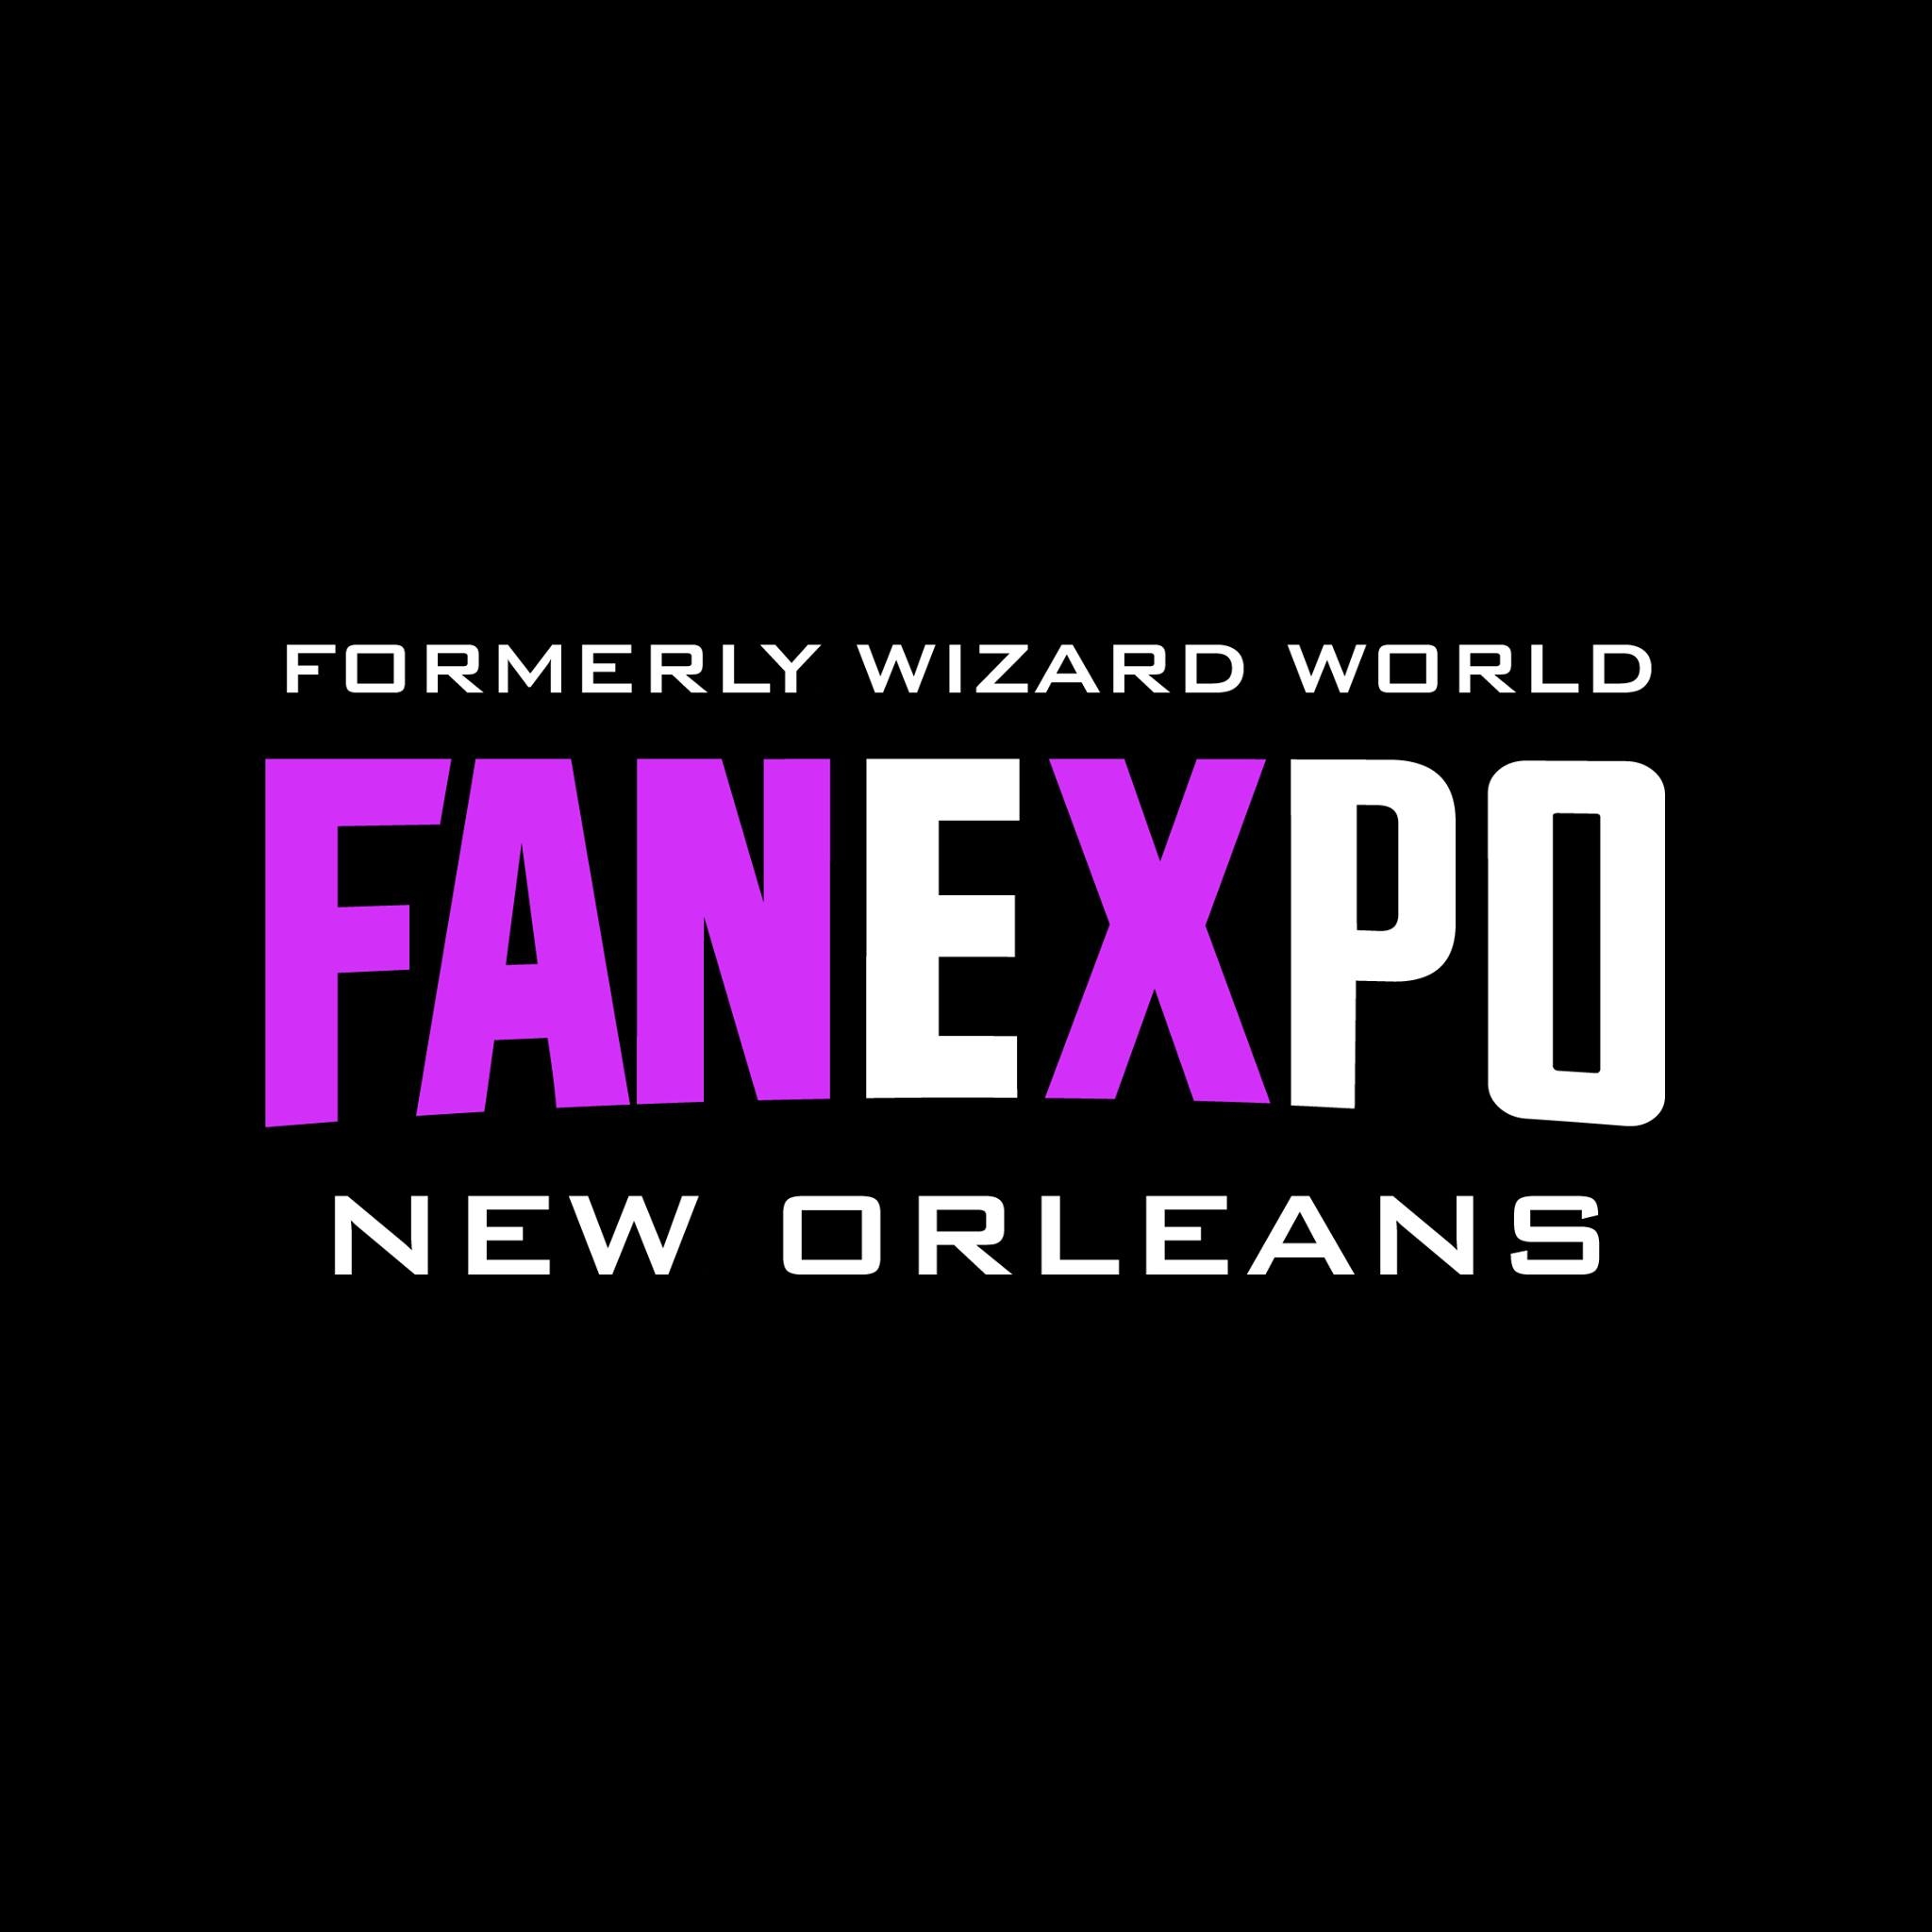 FAN EXPO New Orleans